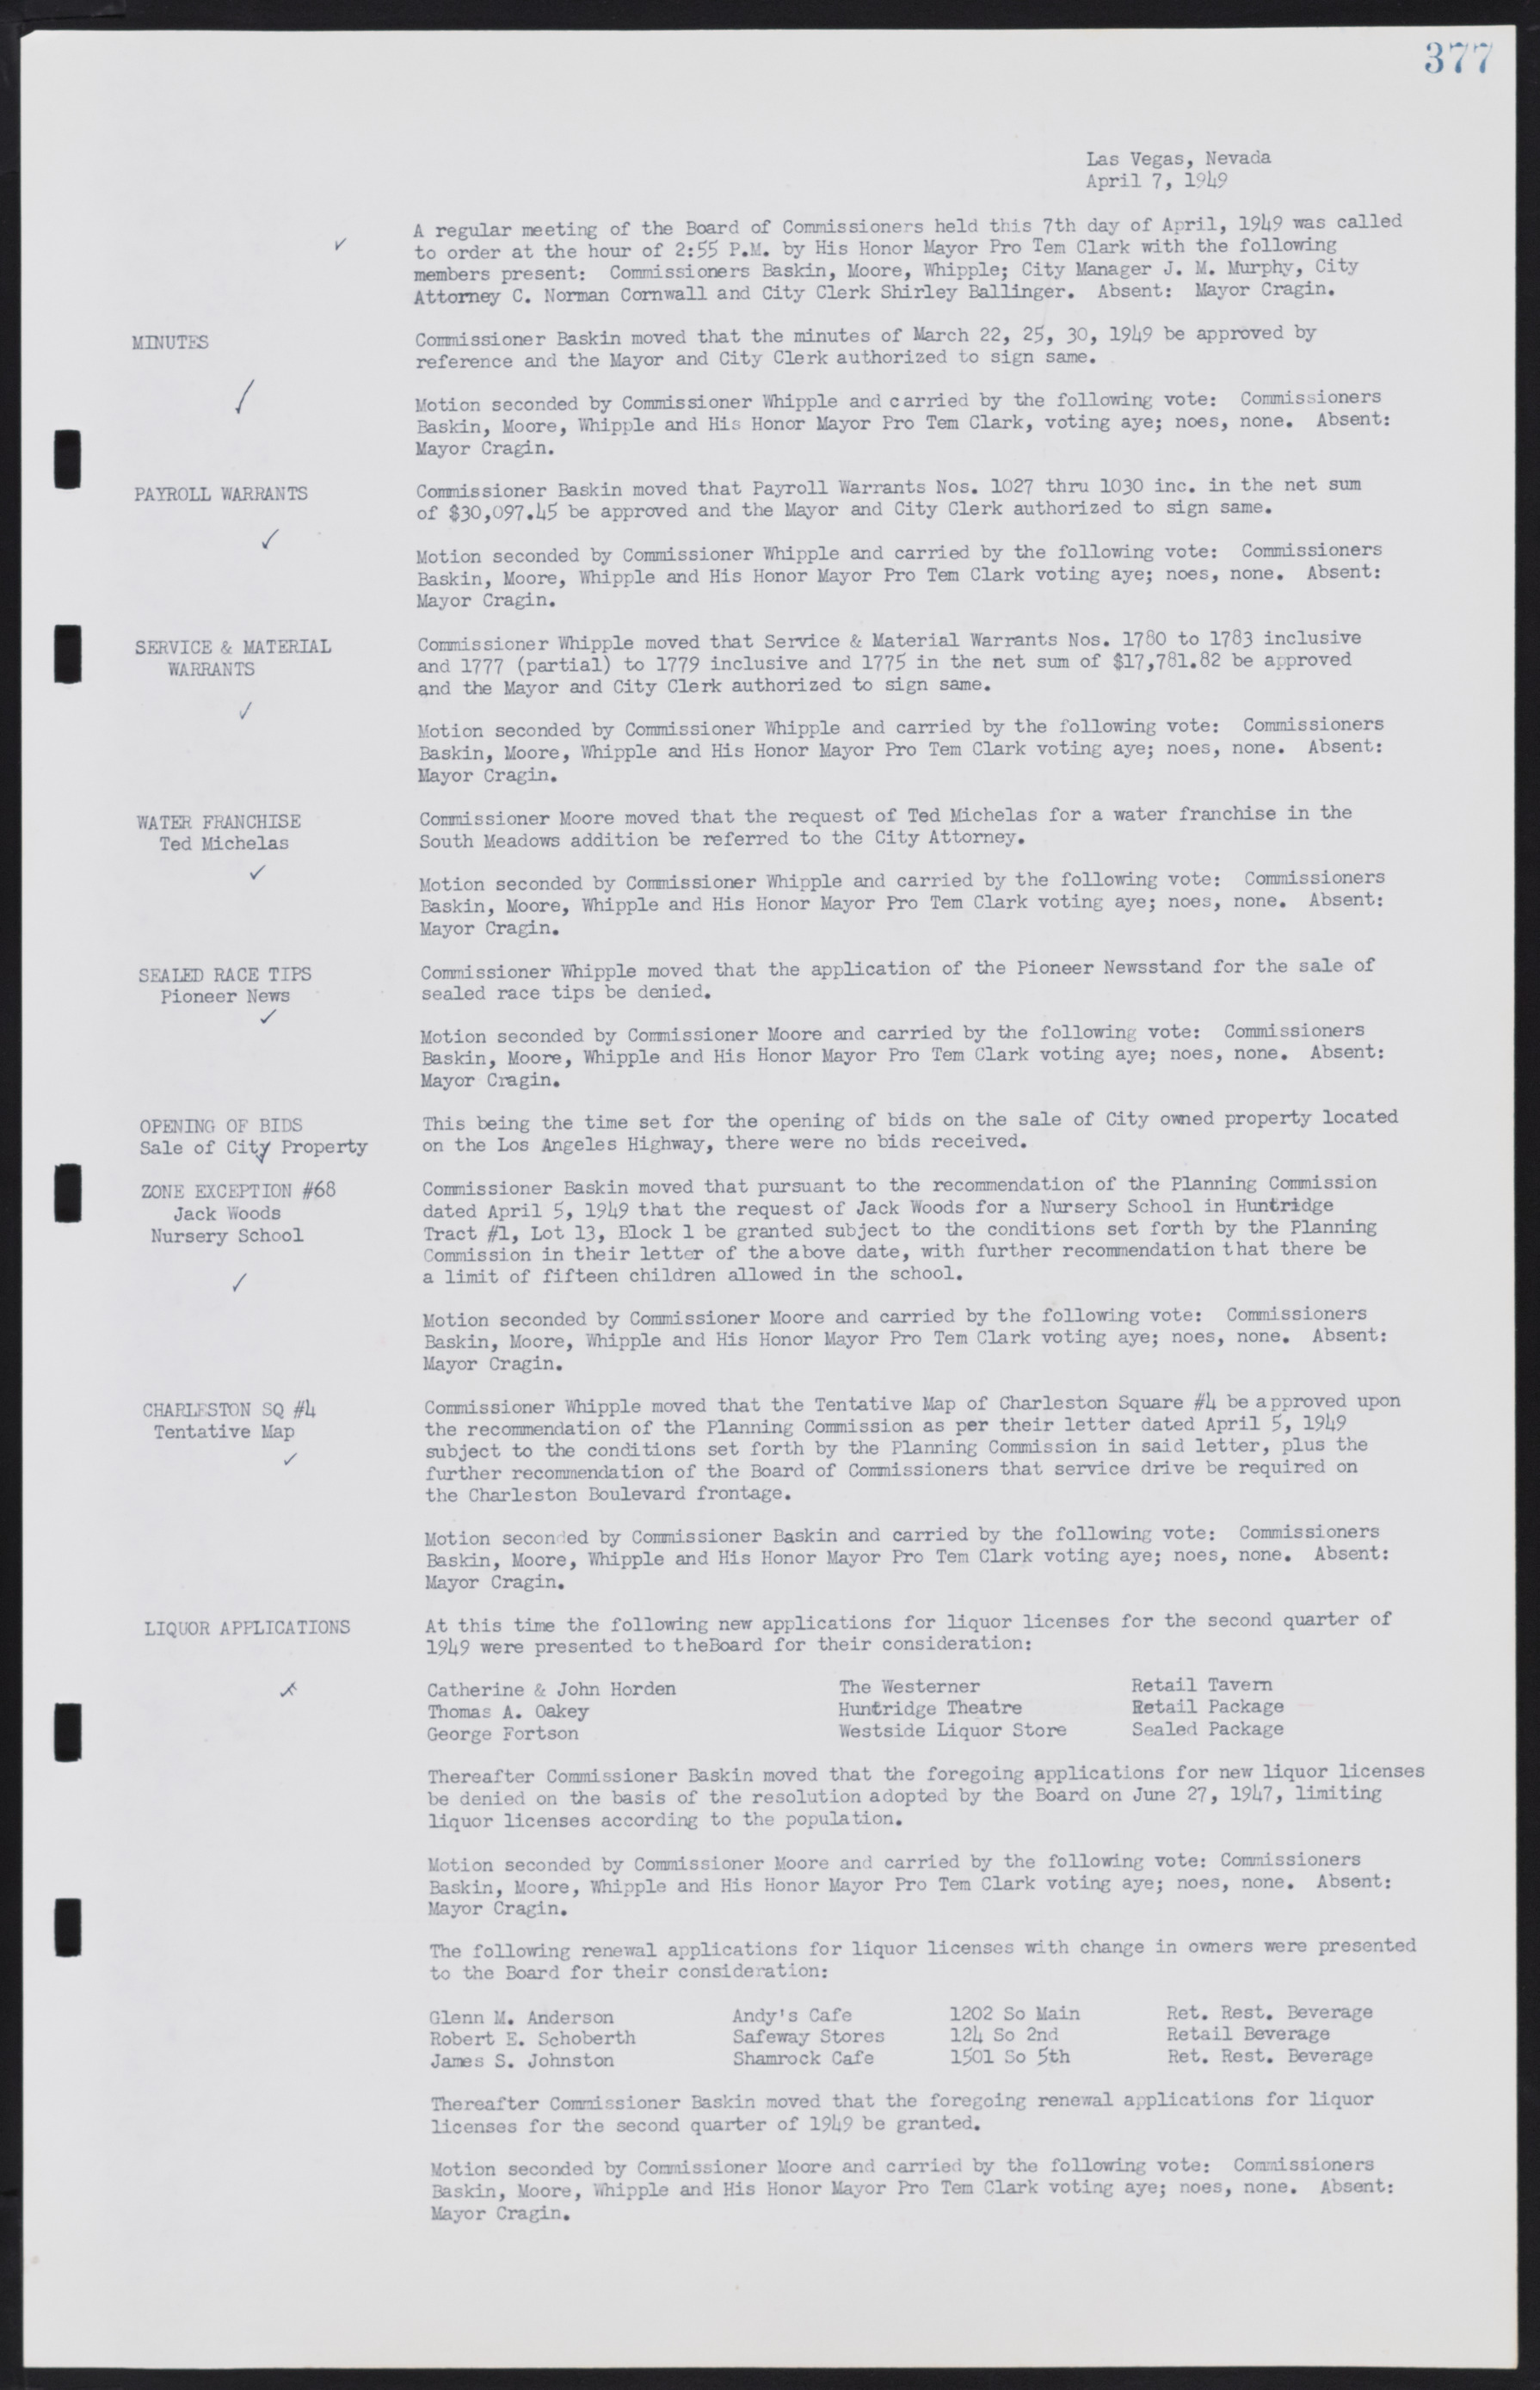 Las Vegas City Commission Minutes, January 7, 1947 to October 26, 1949, lvc000006-407